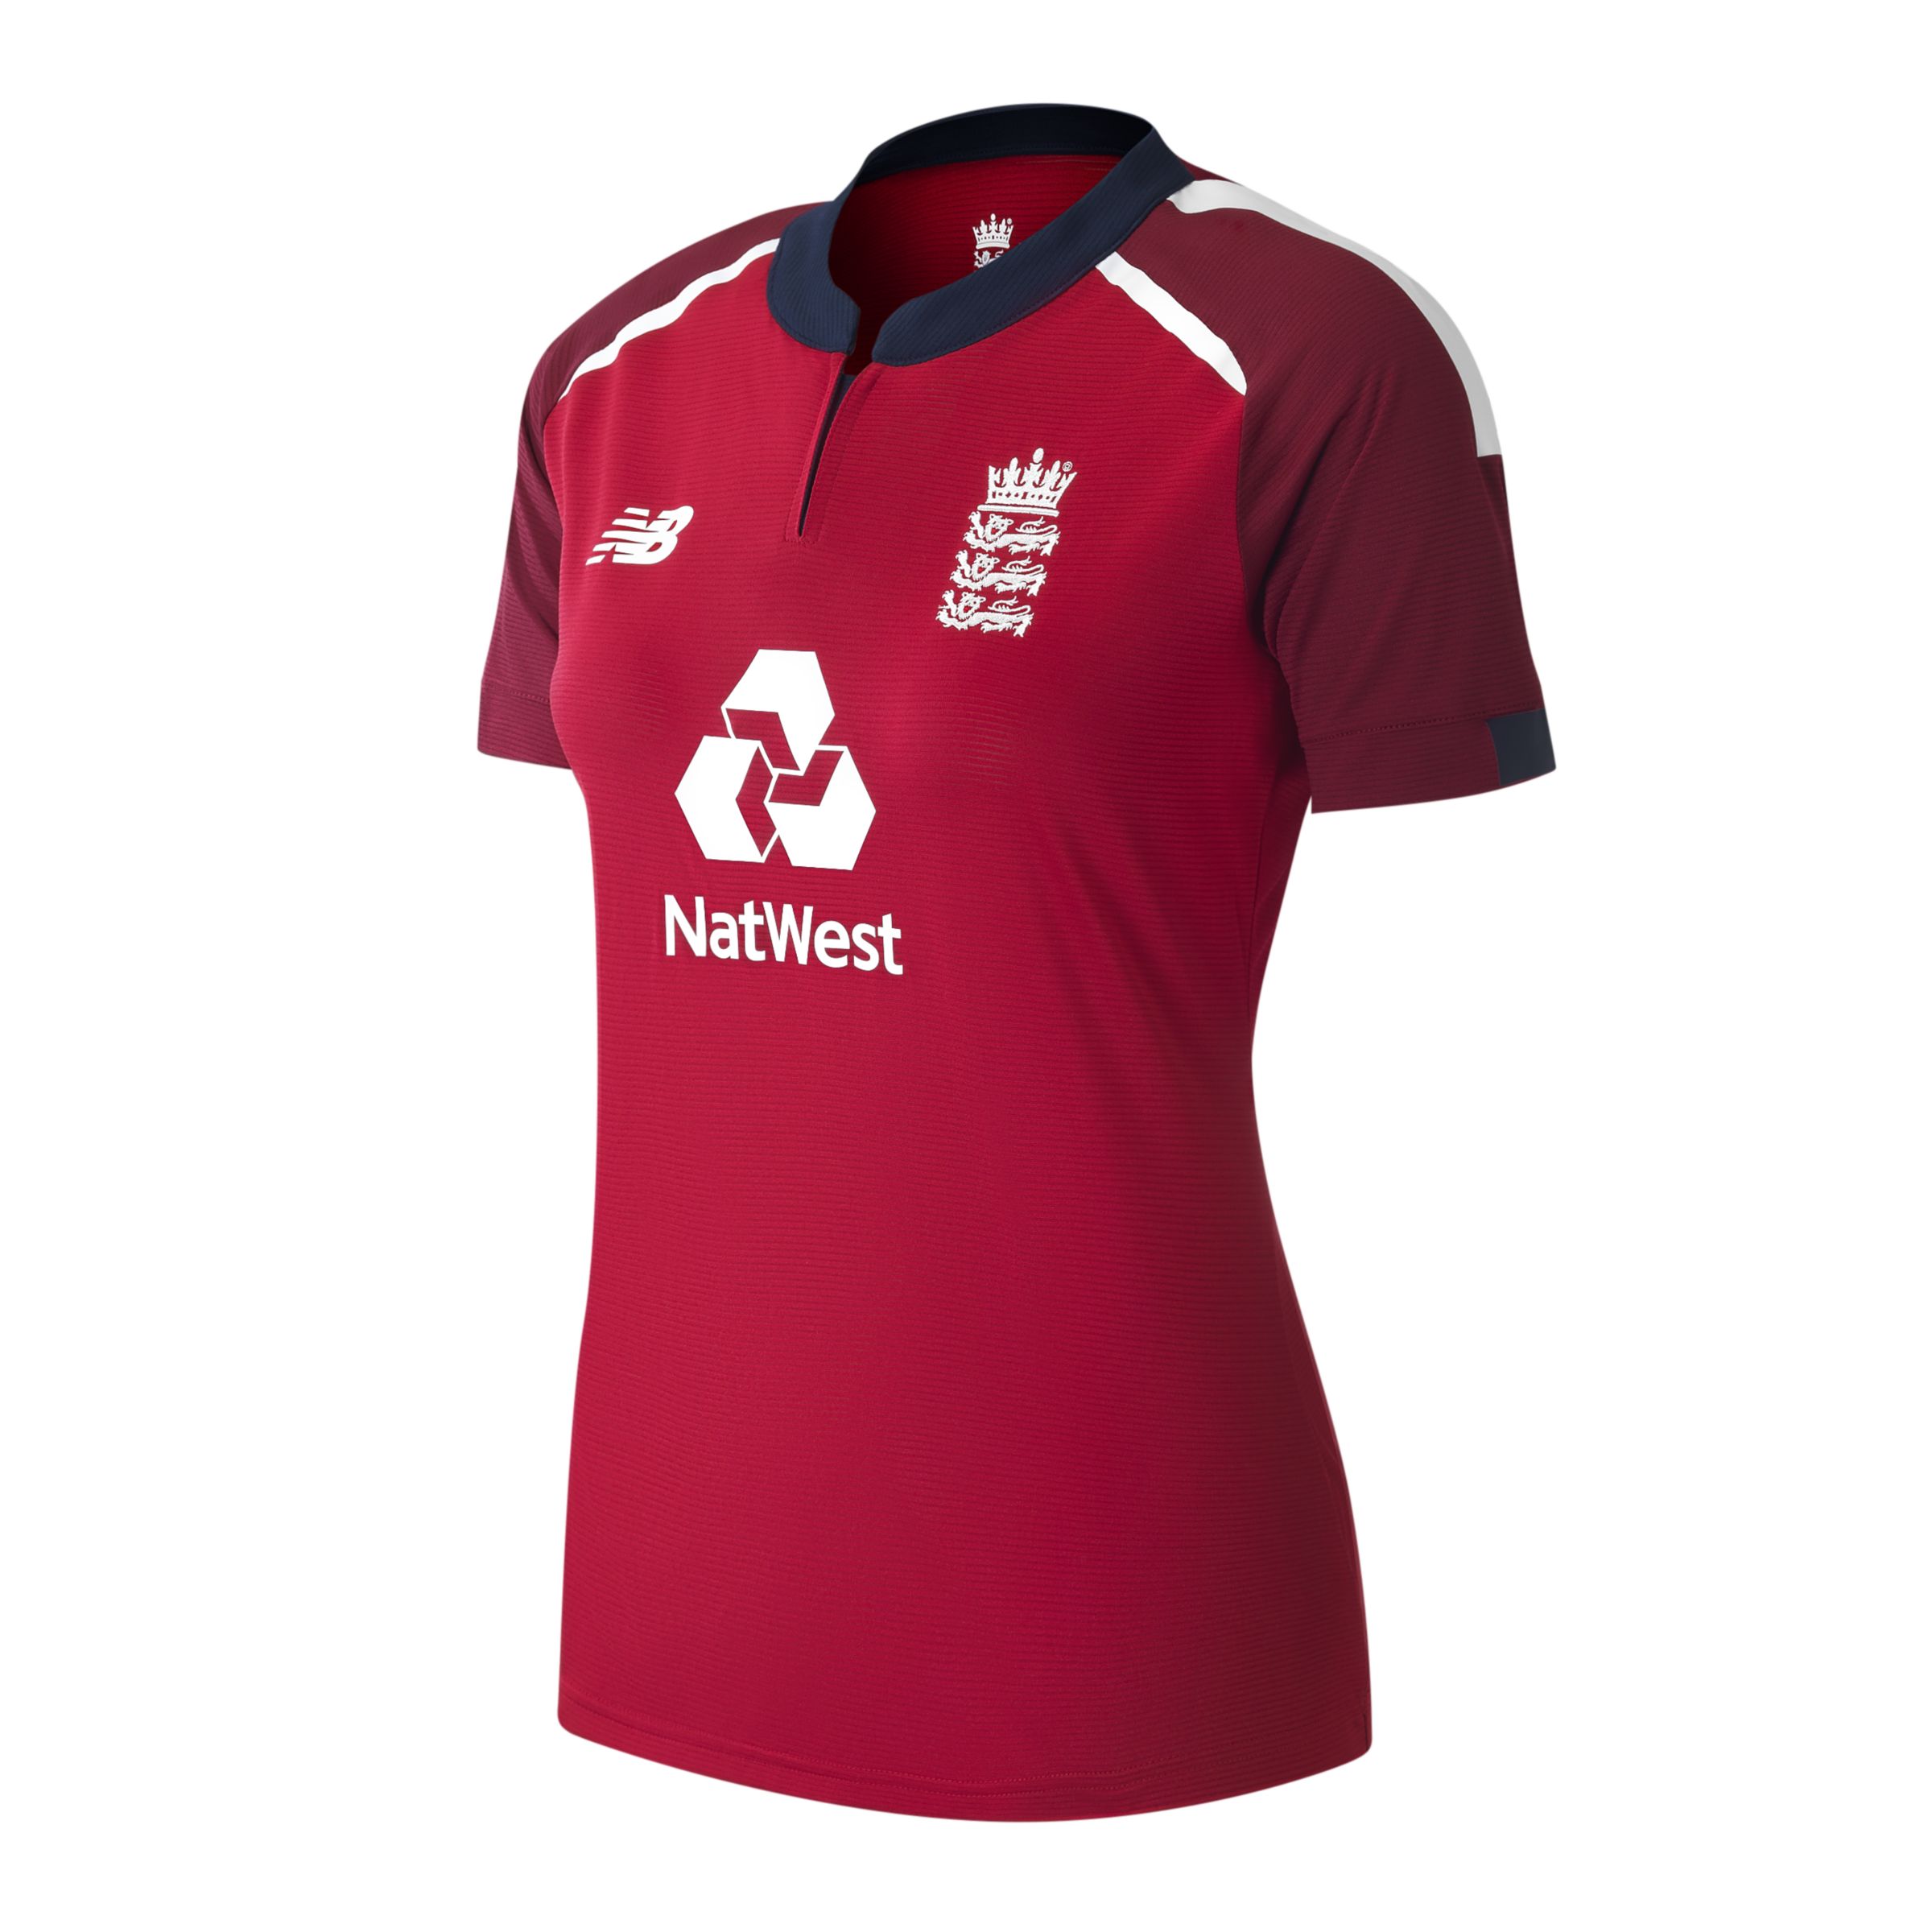 england new jersey 2020 cricket